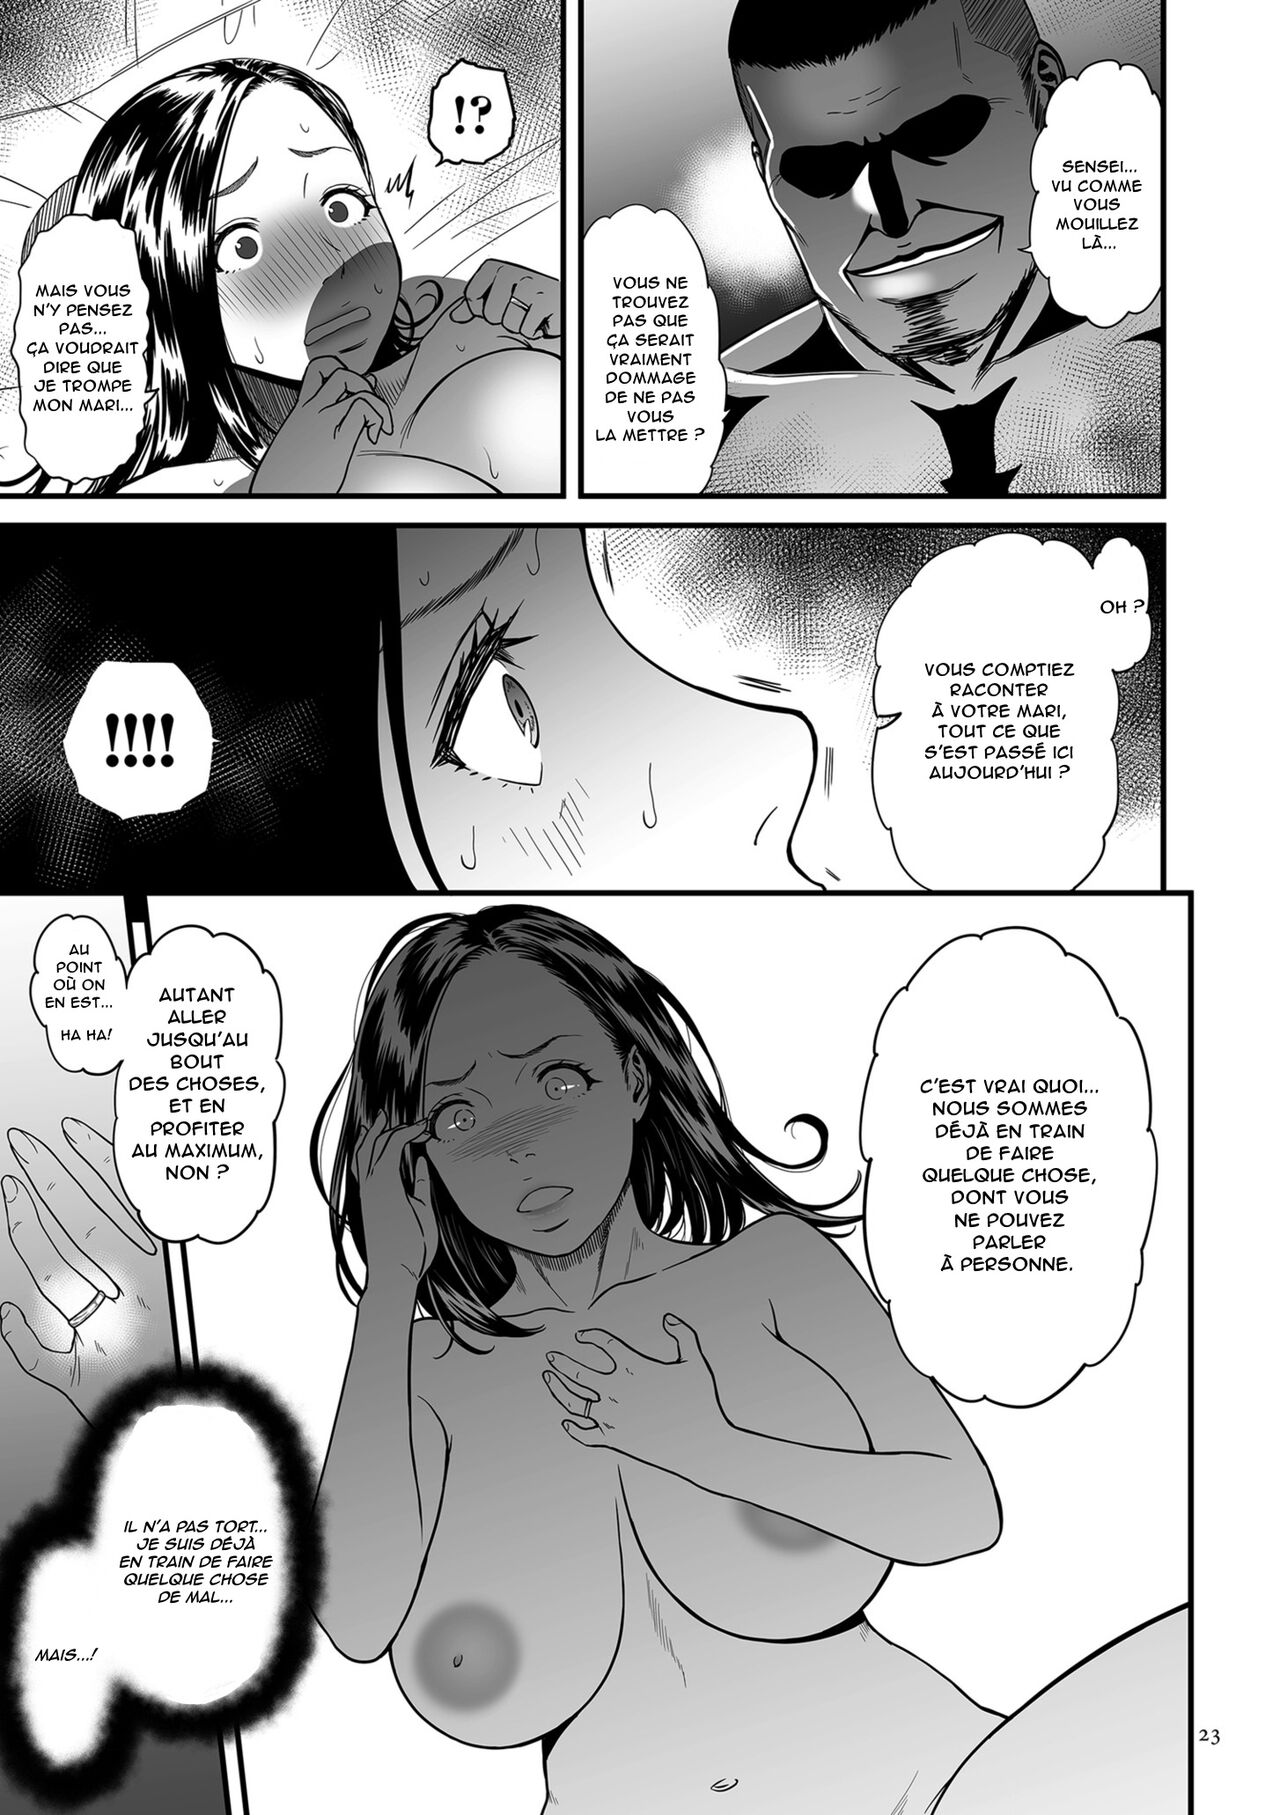 Onna Eromangaka ga Inran da nante Gensou ja nai?  Is It Not a Fantasy That The Female Erotic Mangaka Is a Pervert? numero d'image 23